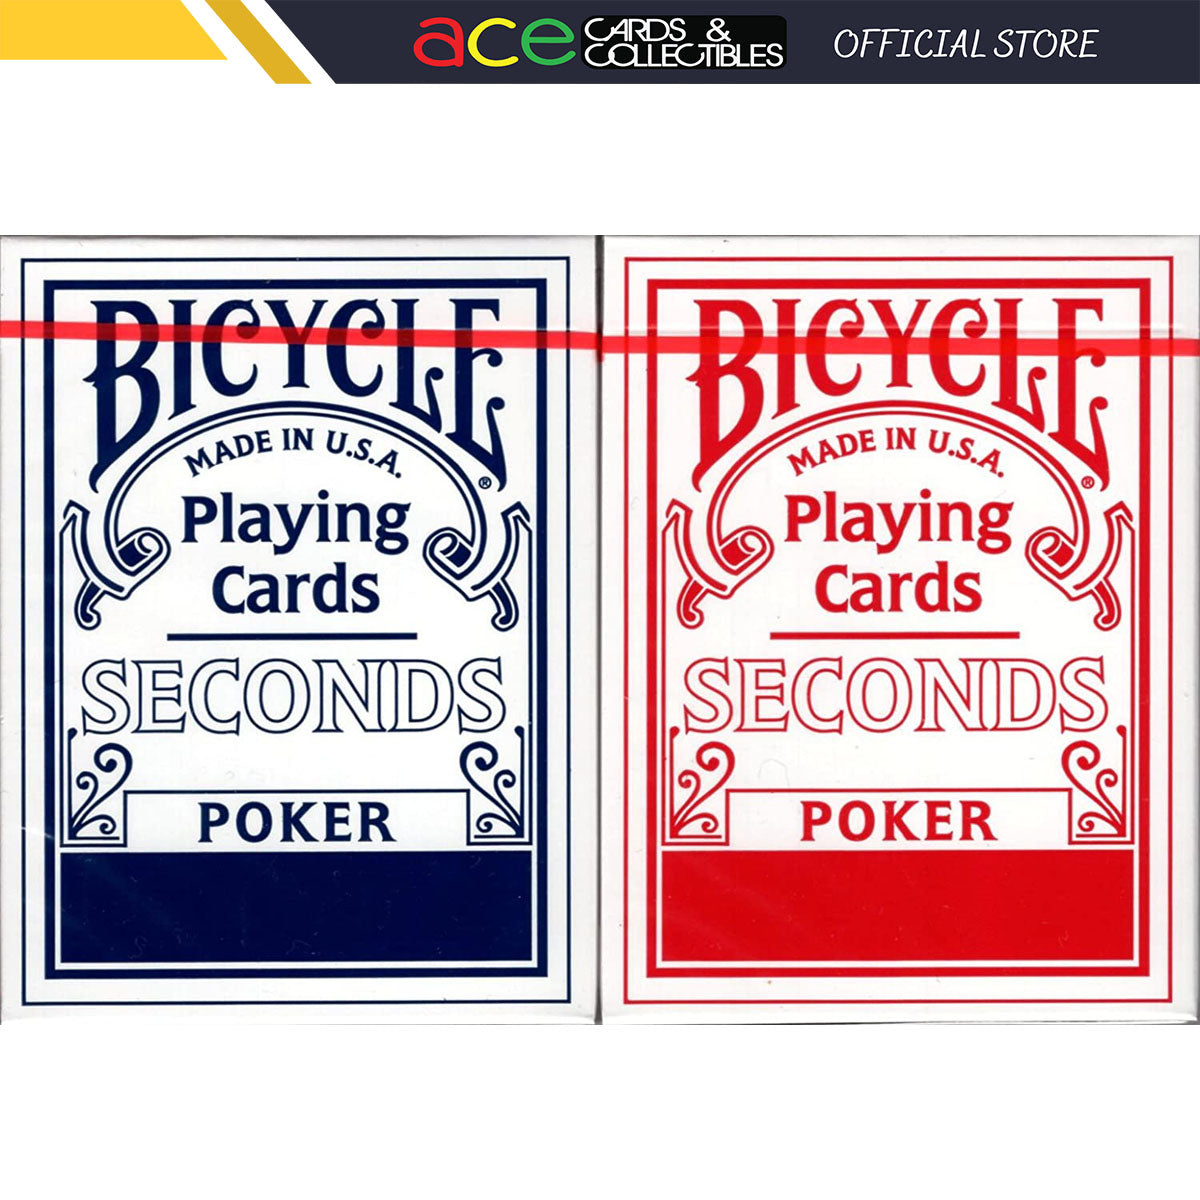 Bicycle Poker Cards - Poker Merchant